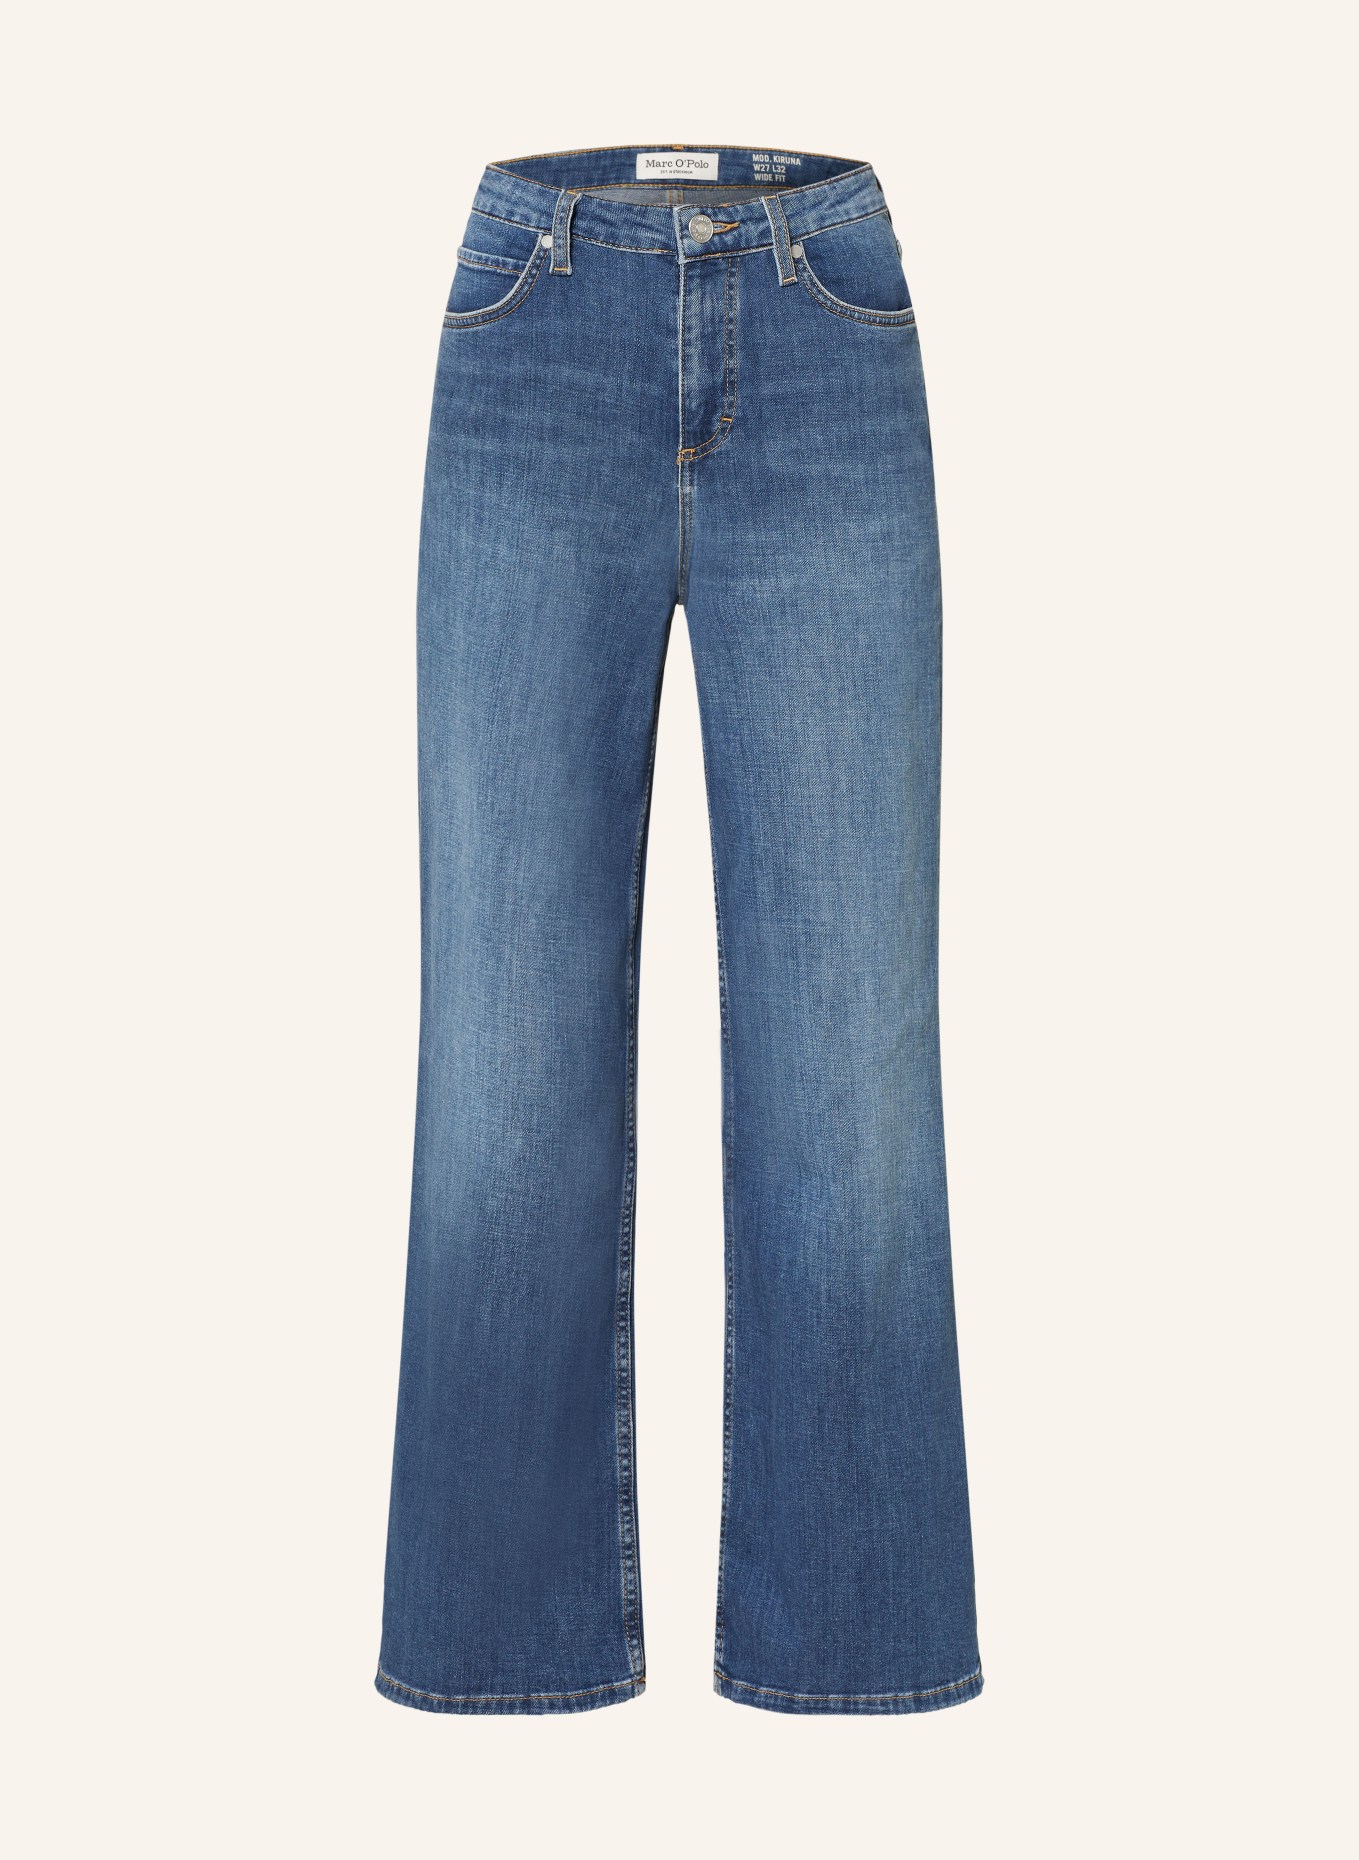 Marc O'Polo Flared Jeans KIRUNA, Farbe: 055 Cashmere soft blue wash (Bild 1)